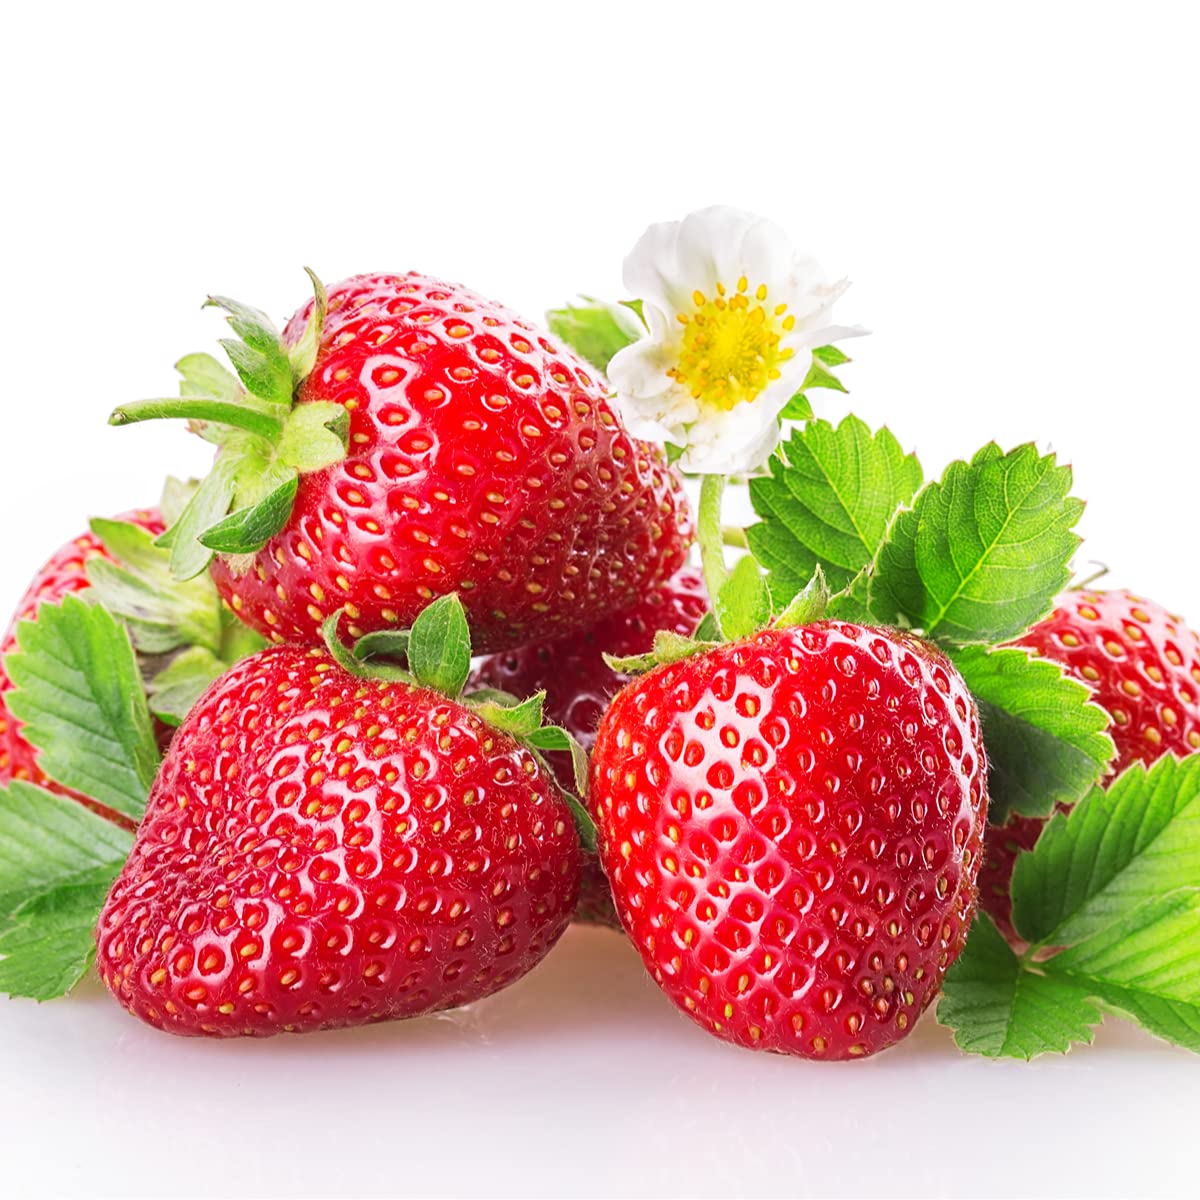 Strawberry Plants - 'Elegance' - 6 x Full Plants in 9cm Pots - AcquaGarden